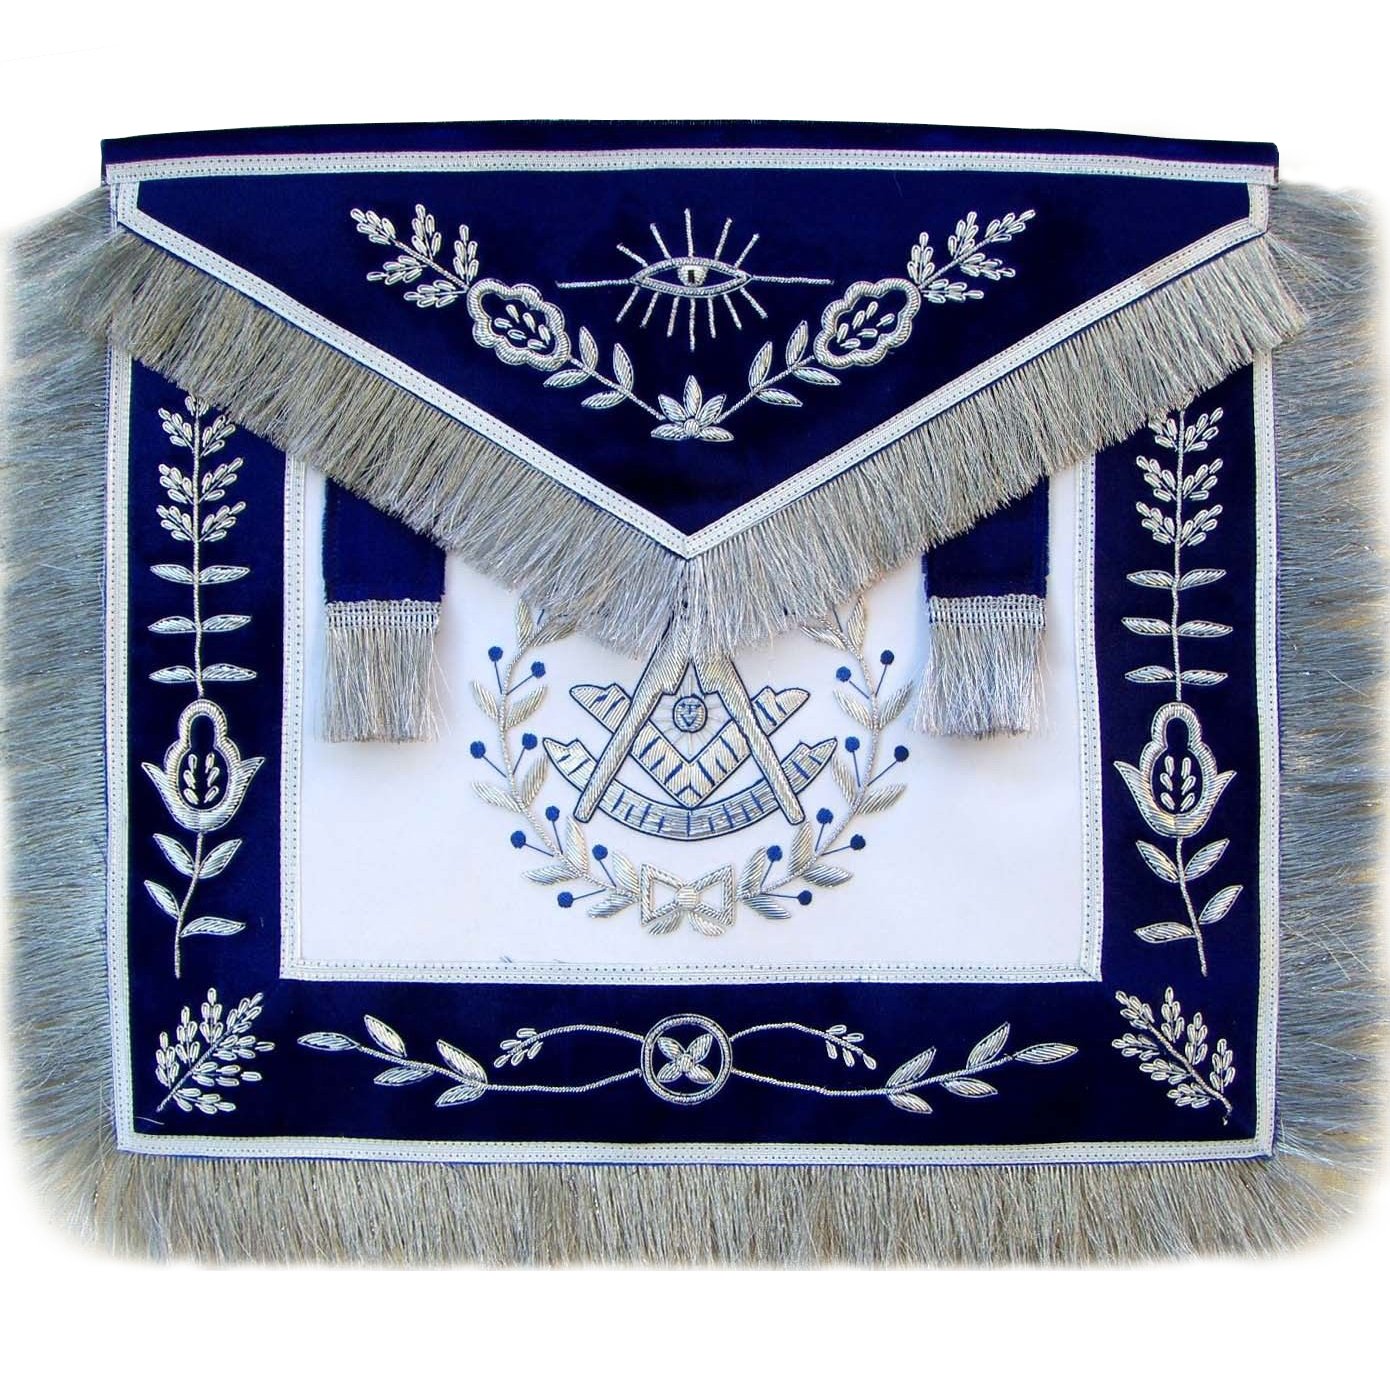 Past Master Blue Lodge Apron - Hand Embroidered Vinework & Silver Fringe Tassels - Bricks Masons